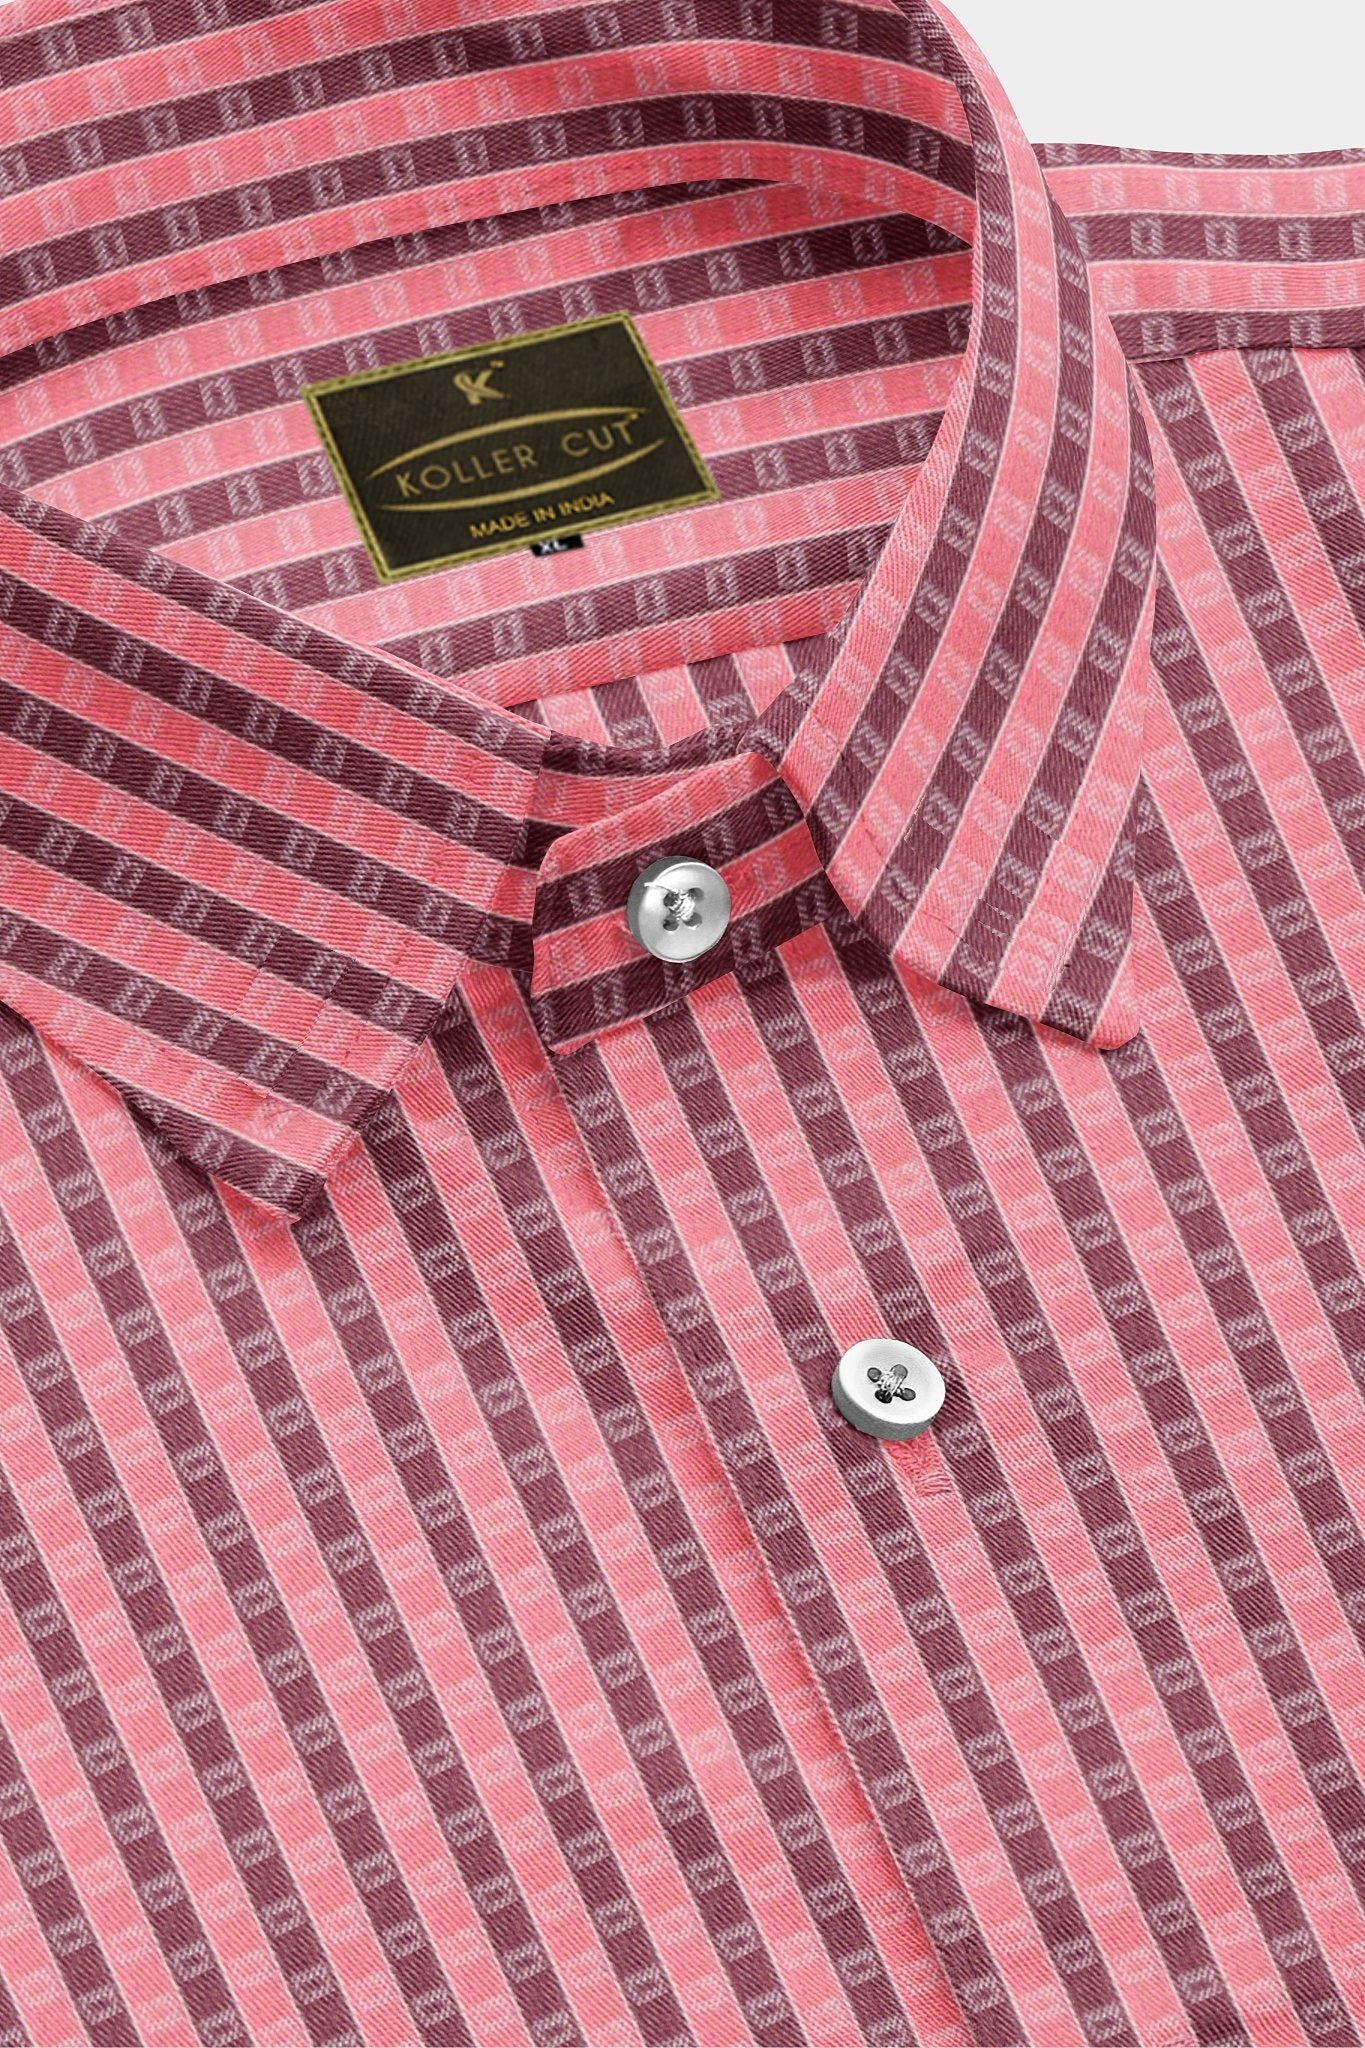 Flamingo Pink and Rosewood Jacquard Square Stripes Men's Premium Cotton Shirt